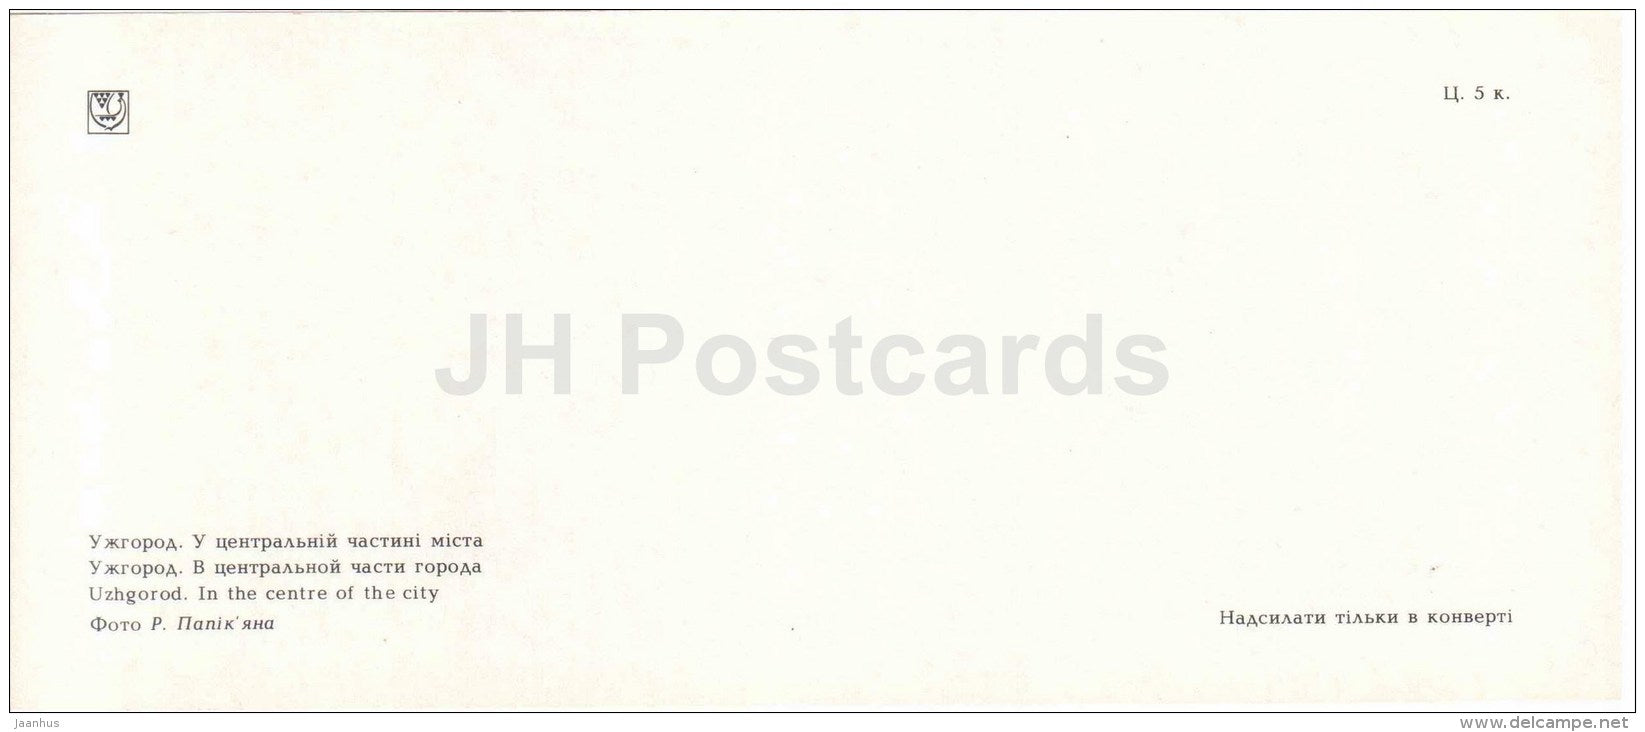 in the centre of the city - Uzhgorod - Uzhhorod - 1986 - Ukraine USSR - unused - JH Postcards